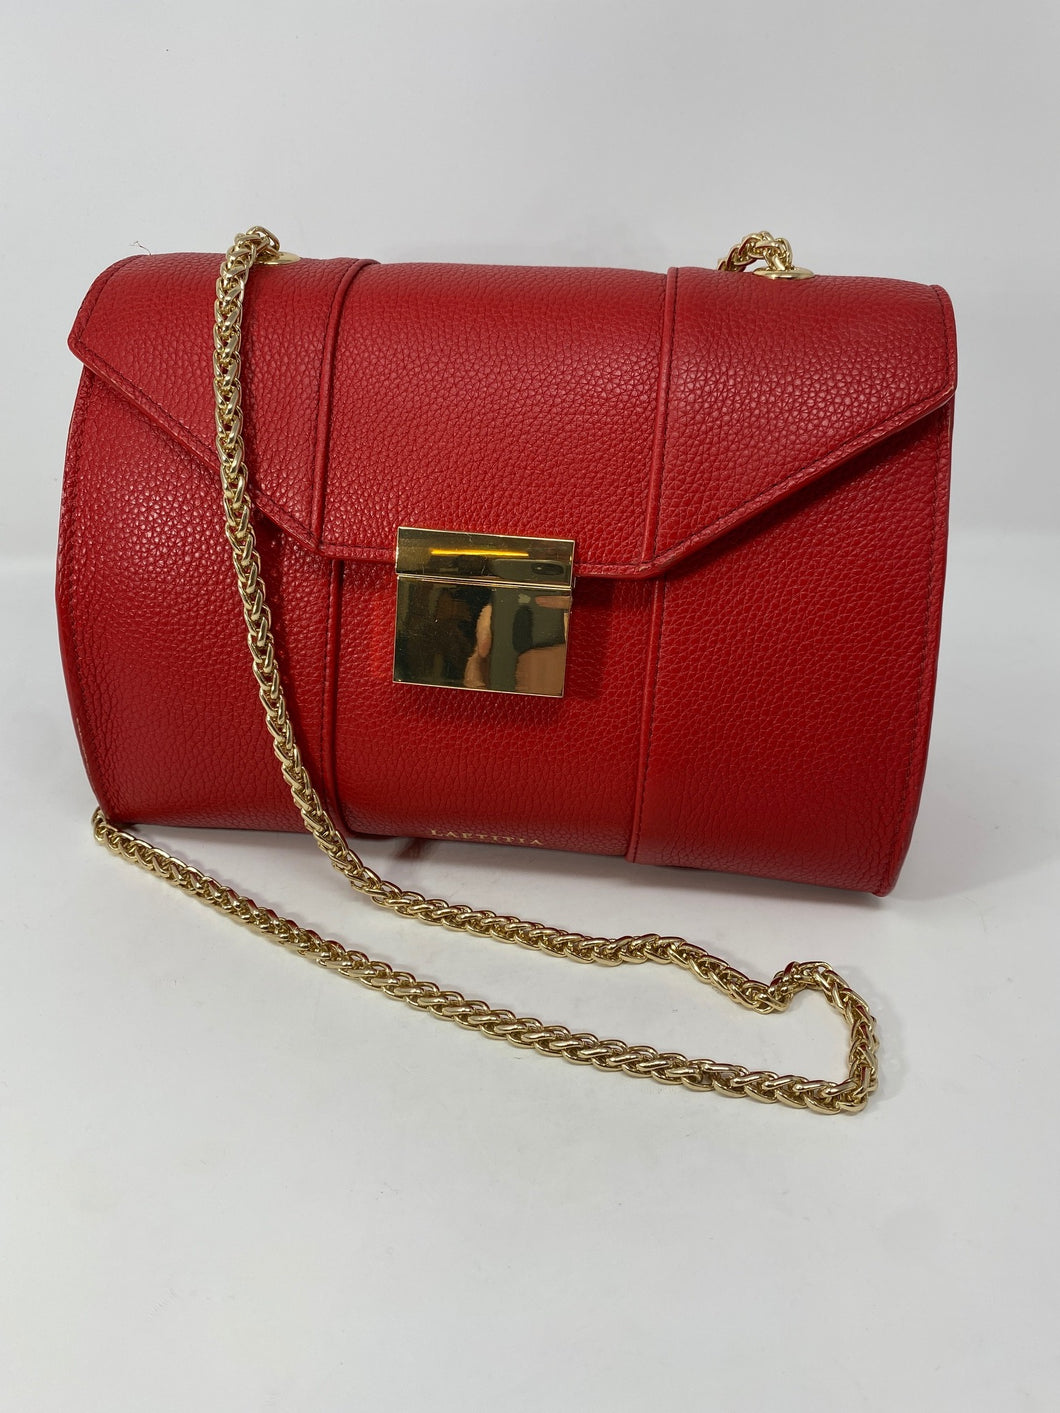 Italian Leather Handbag by Laetitia